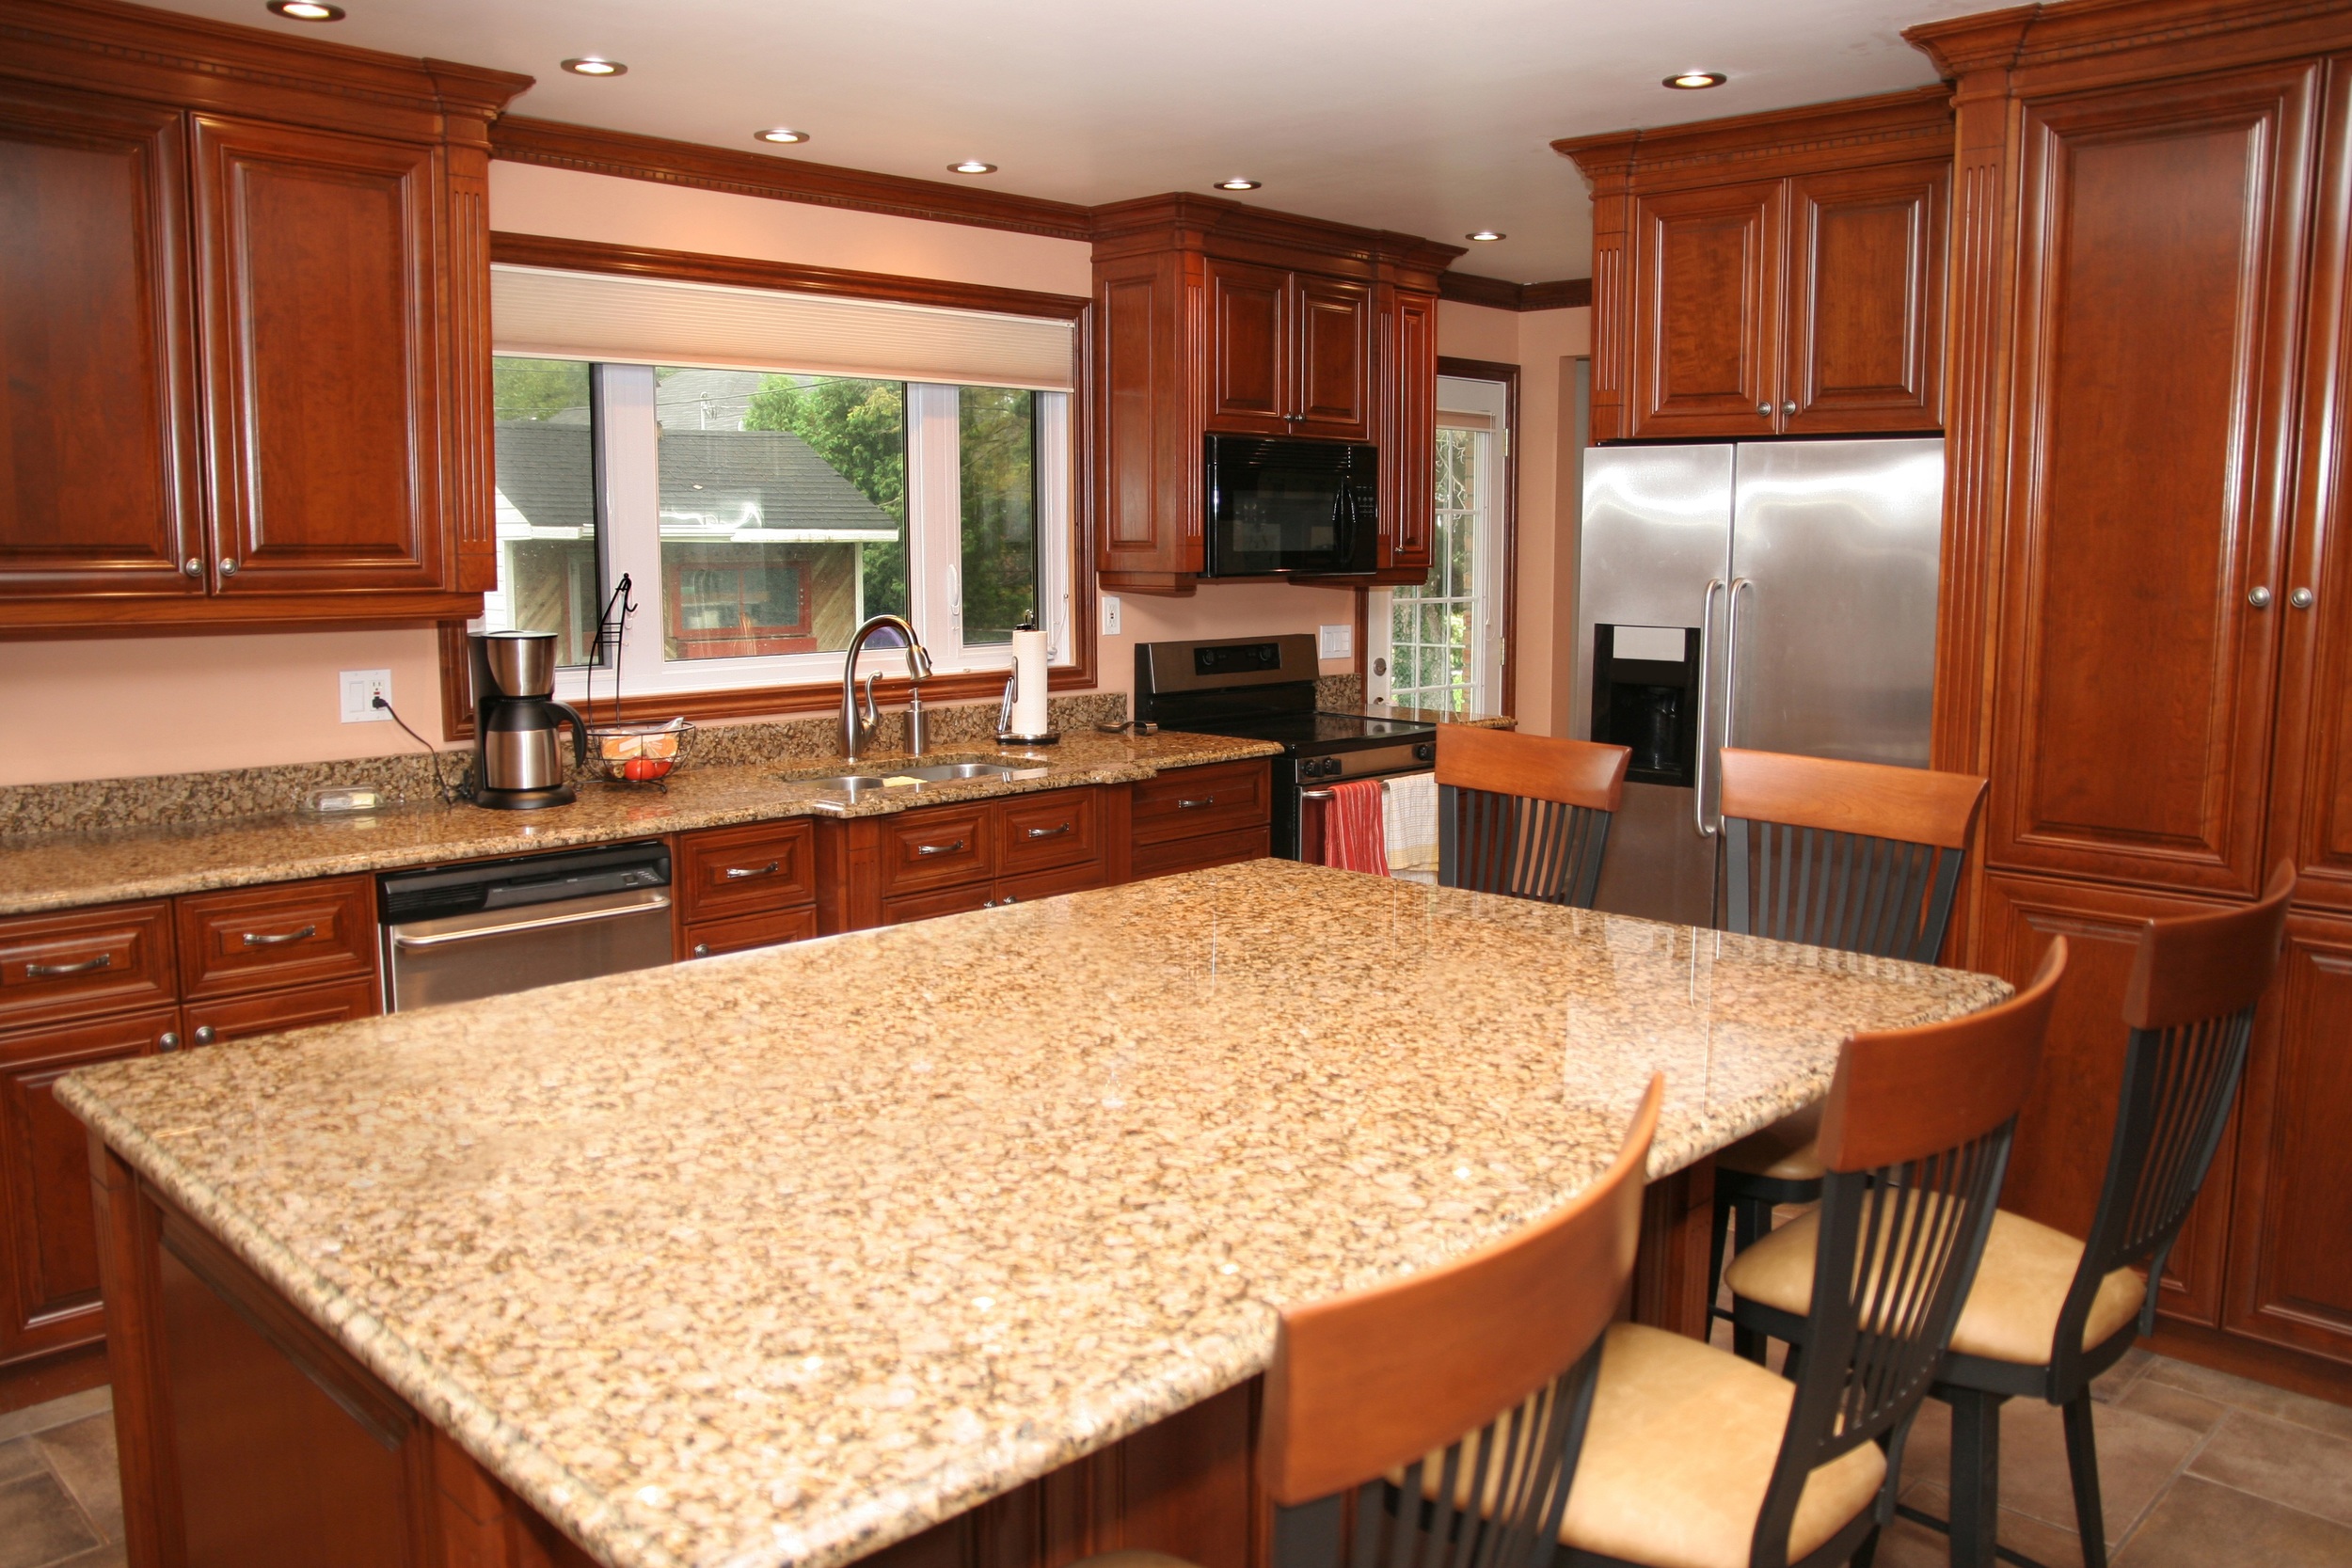 Clean Kitchen Countertops Cabinets Sink Tile Floor Granite Appliances.jpg